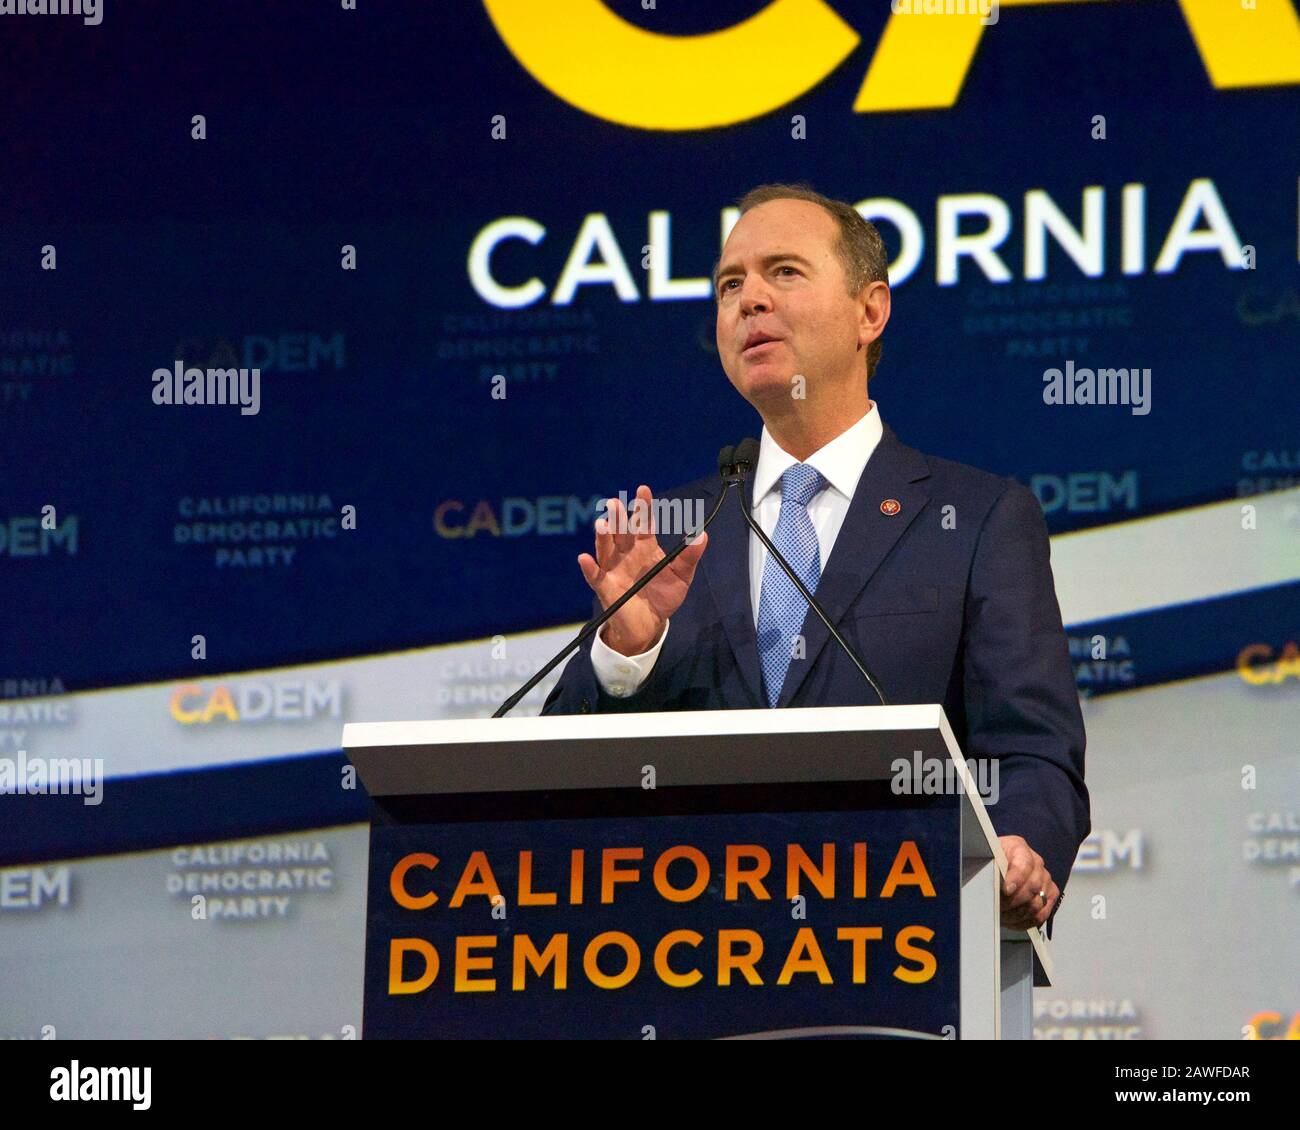 Long Beach, CA - Nov 16, 2019: Senator Adam Schiff speaking at the Democratic Party Endorsing Convention in Long Beach, CA. Stock Photo